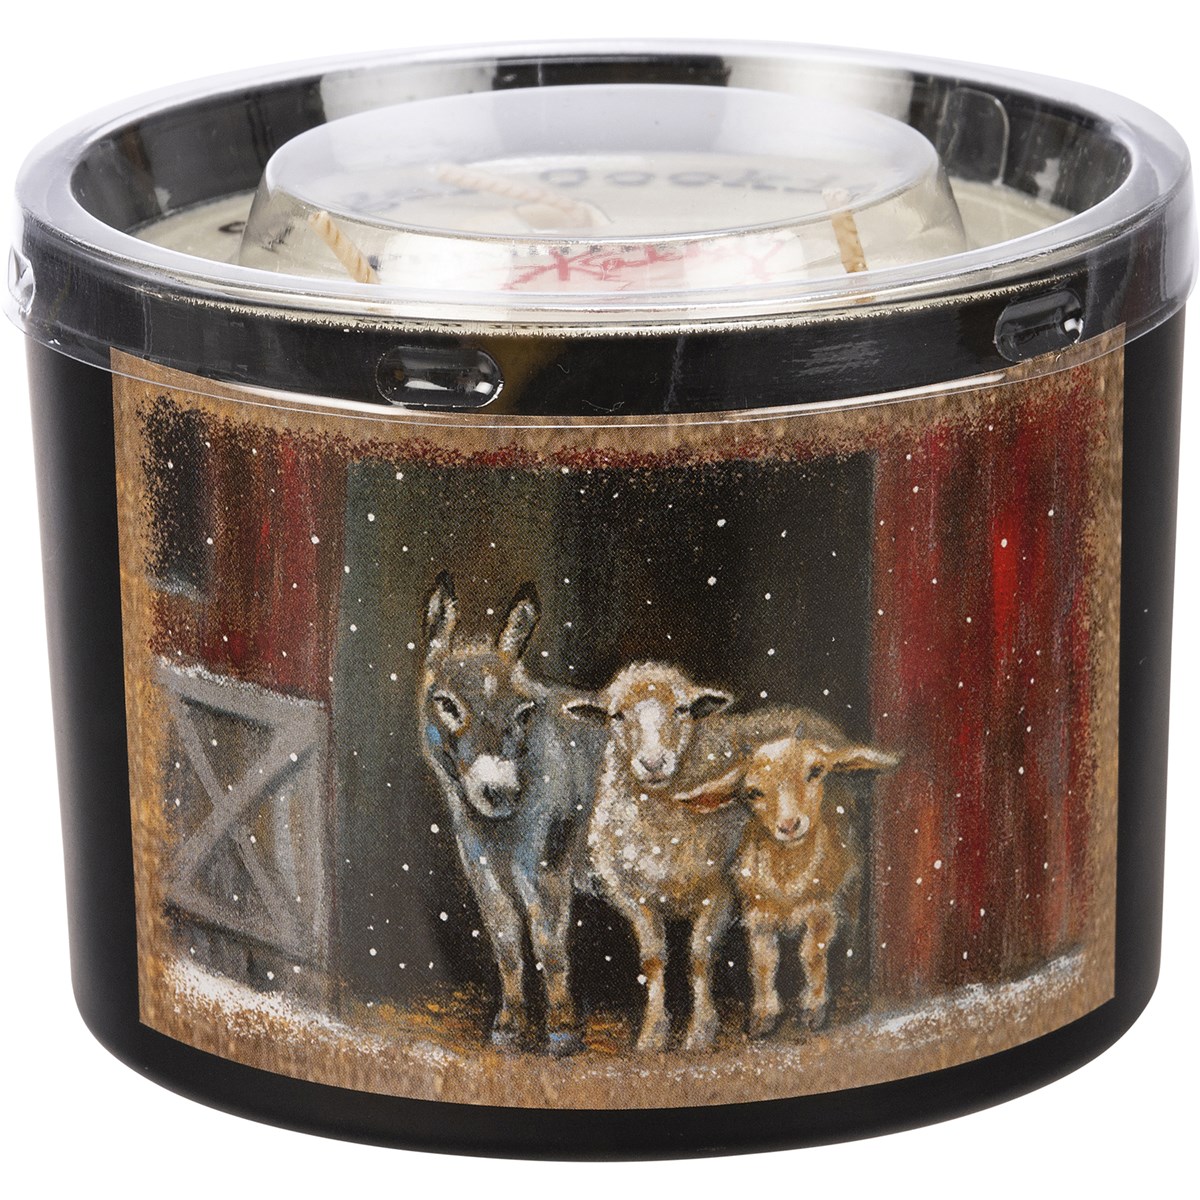 Snowy Farm Family Jar Candle - Soy Wax, Glass, Cotton